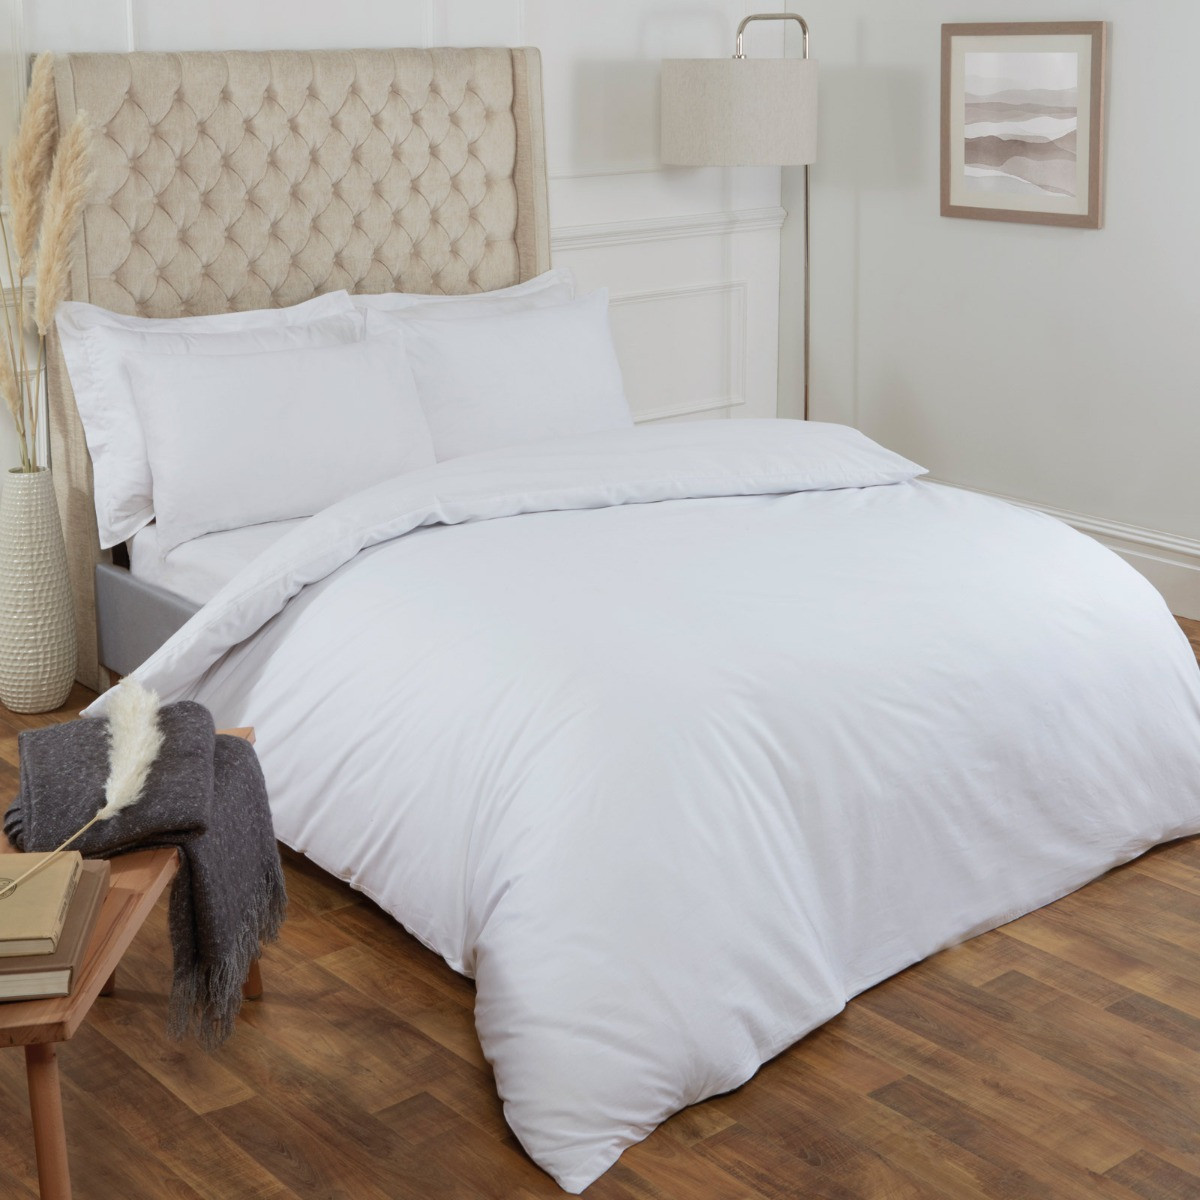 Highams Plain 100% Cotton Duvet Cover with Pillow Case Bedding Set, White - King>